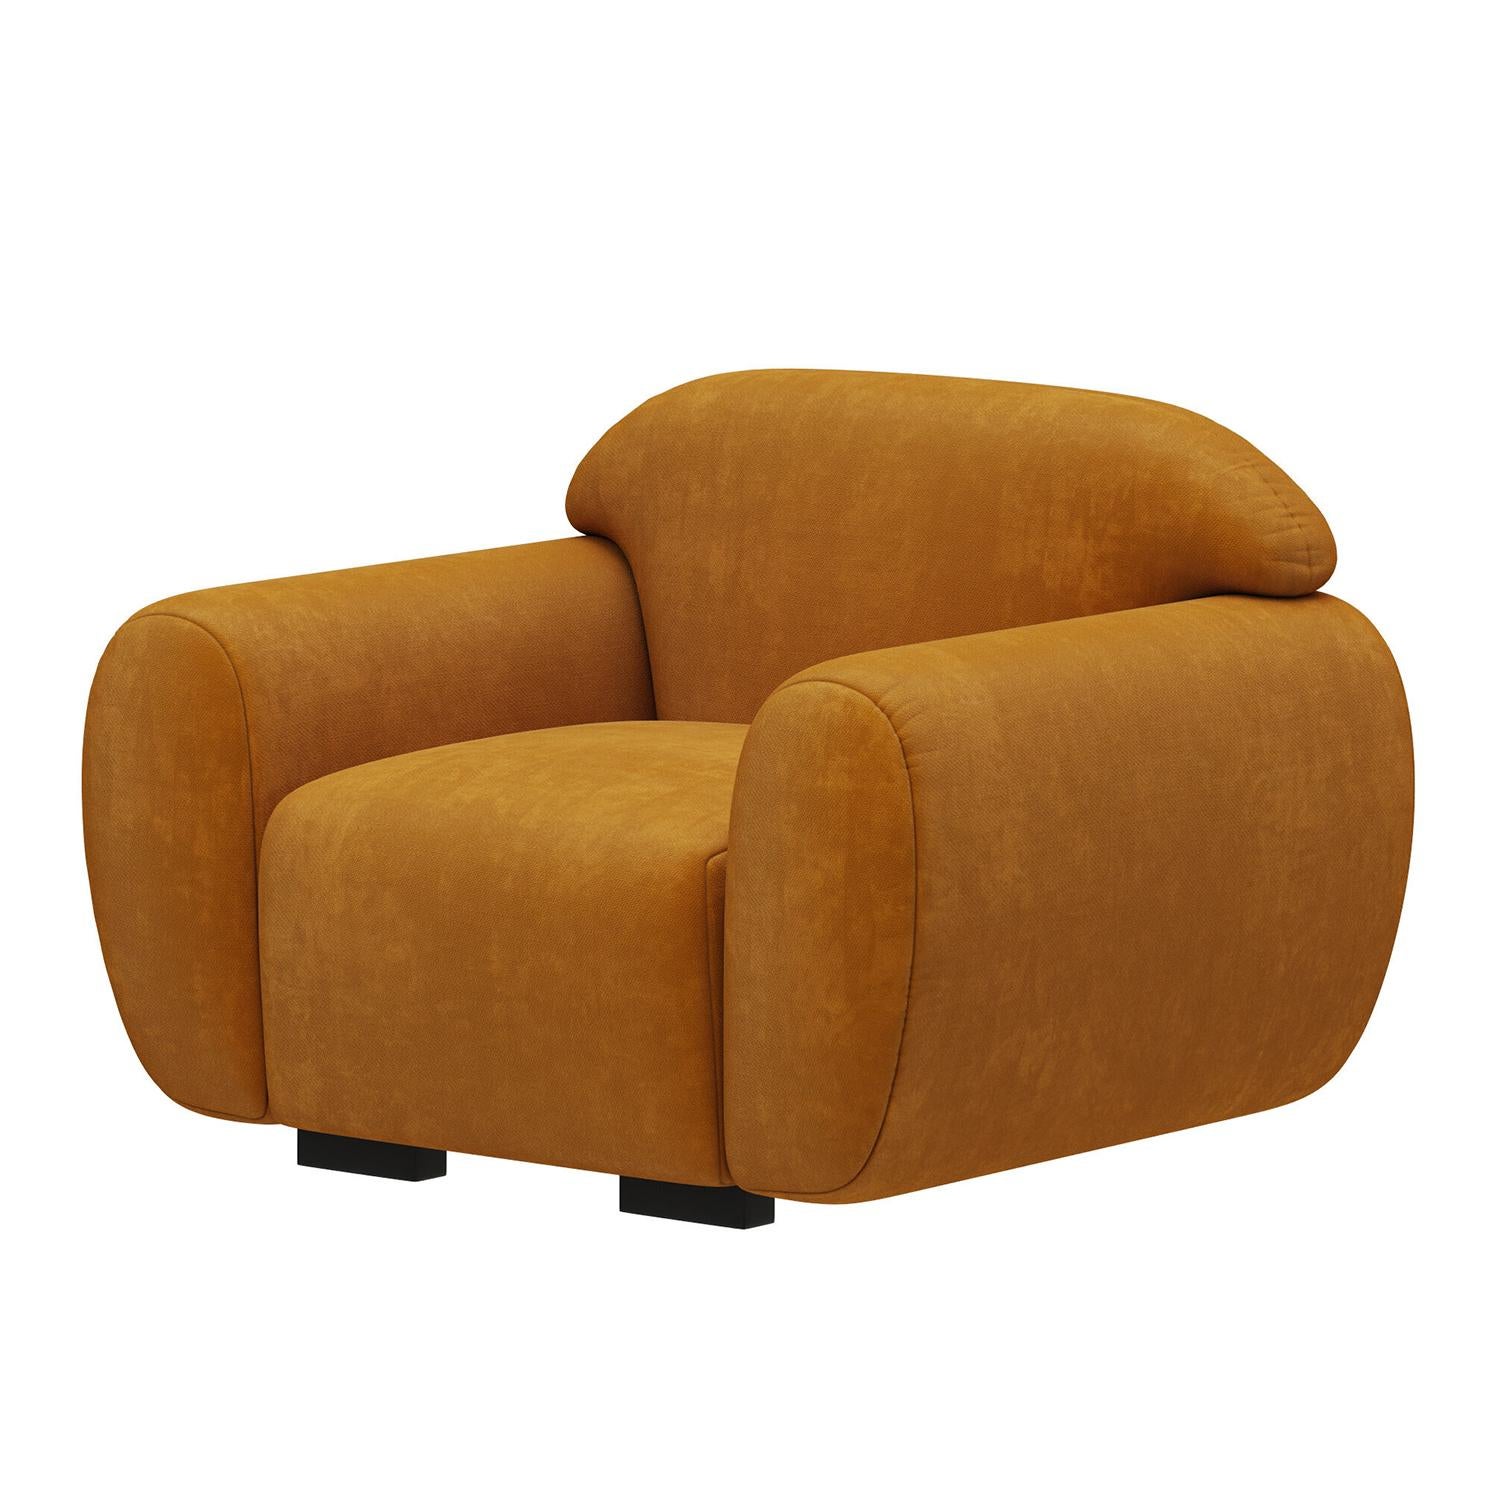 armchair with stool